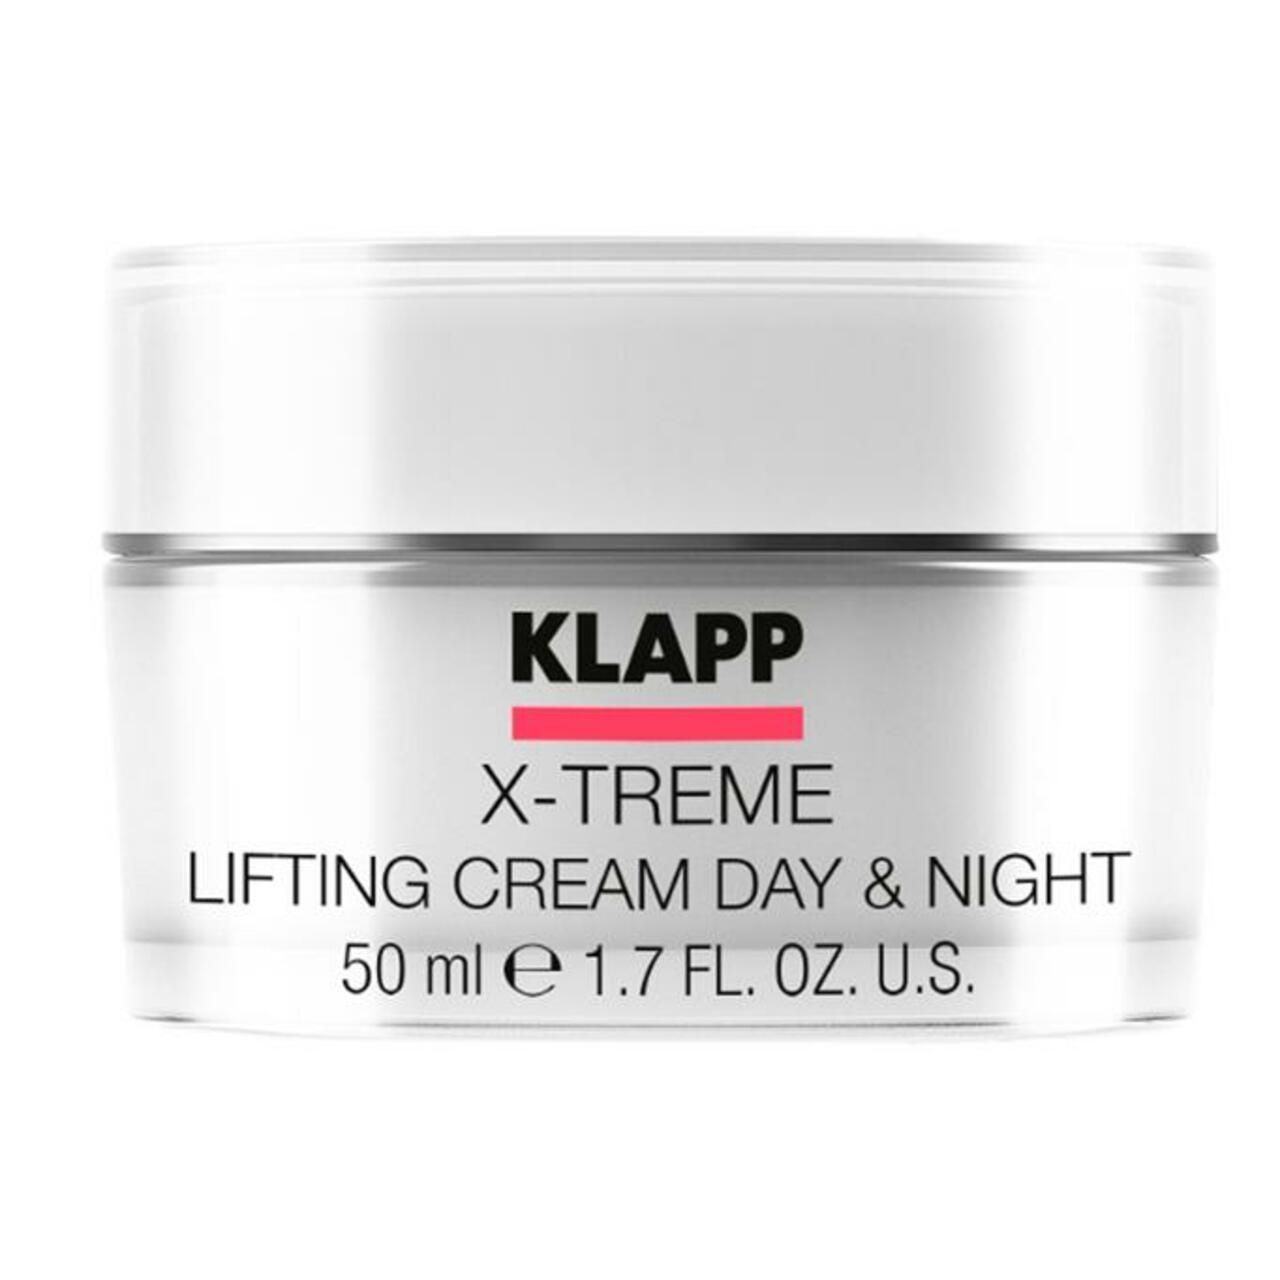 Klapp, X-Treme Lifting Cream Day & Night